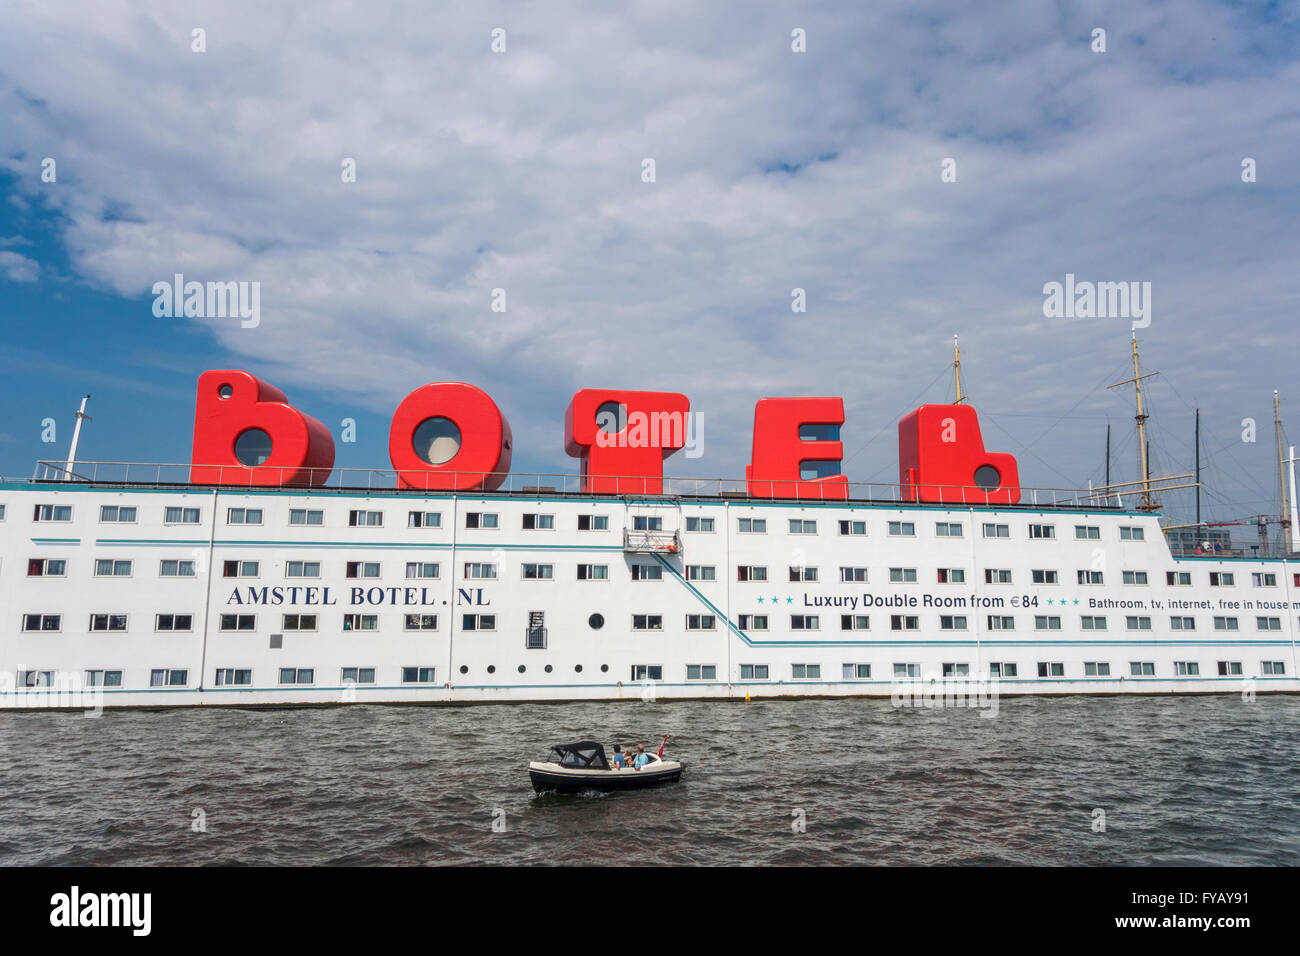 Amsterdam hotel galleggiante Amstel Botel Amsterdam IJ harbour con camere in BOTEL logo caratteri loft Foto Stock